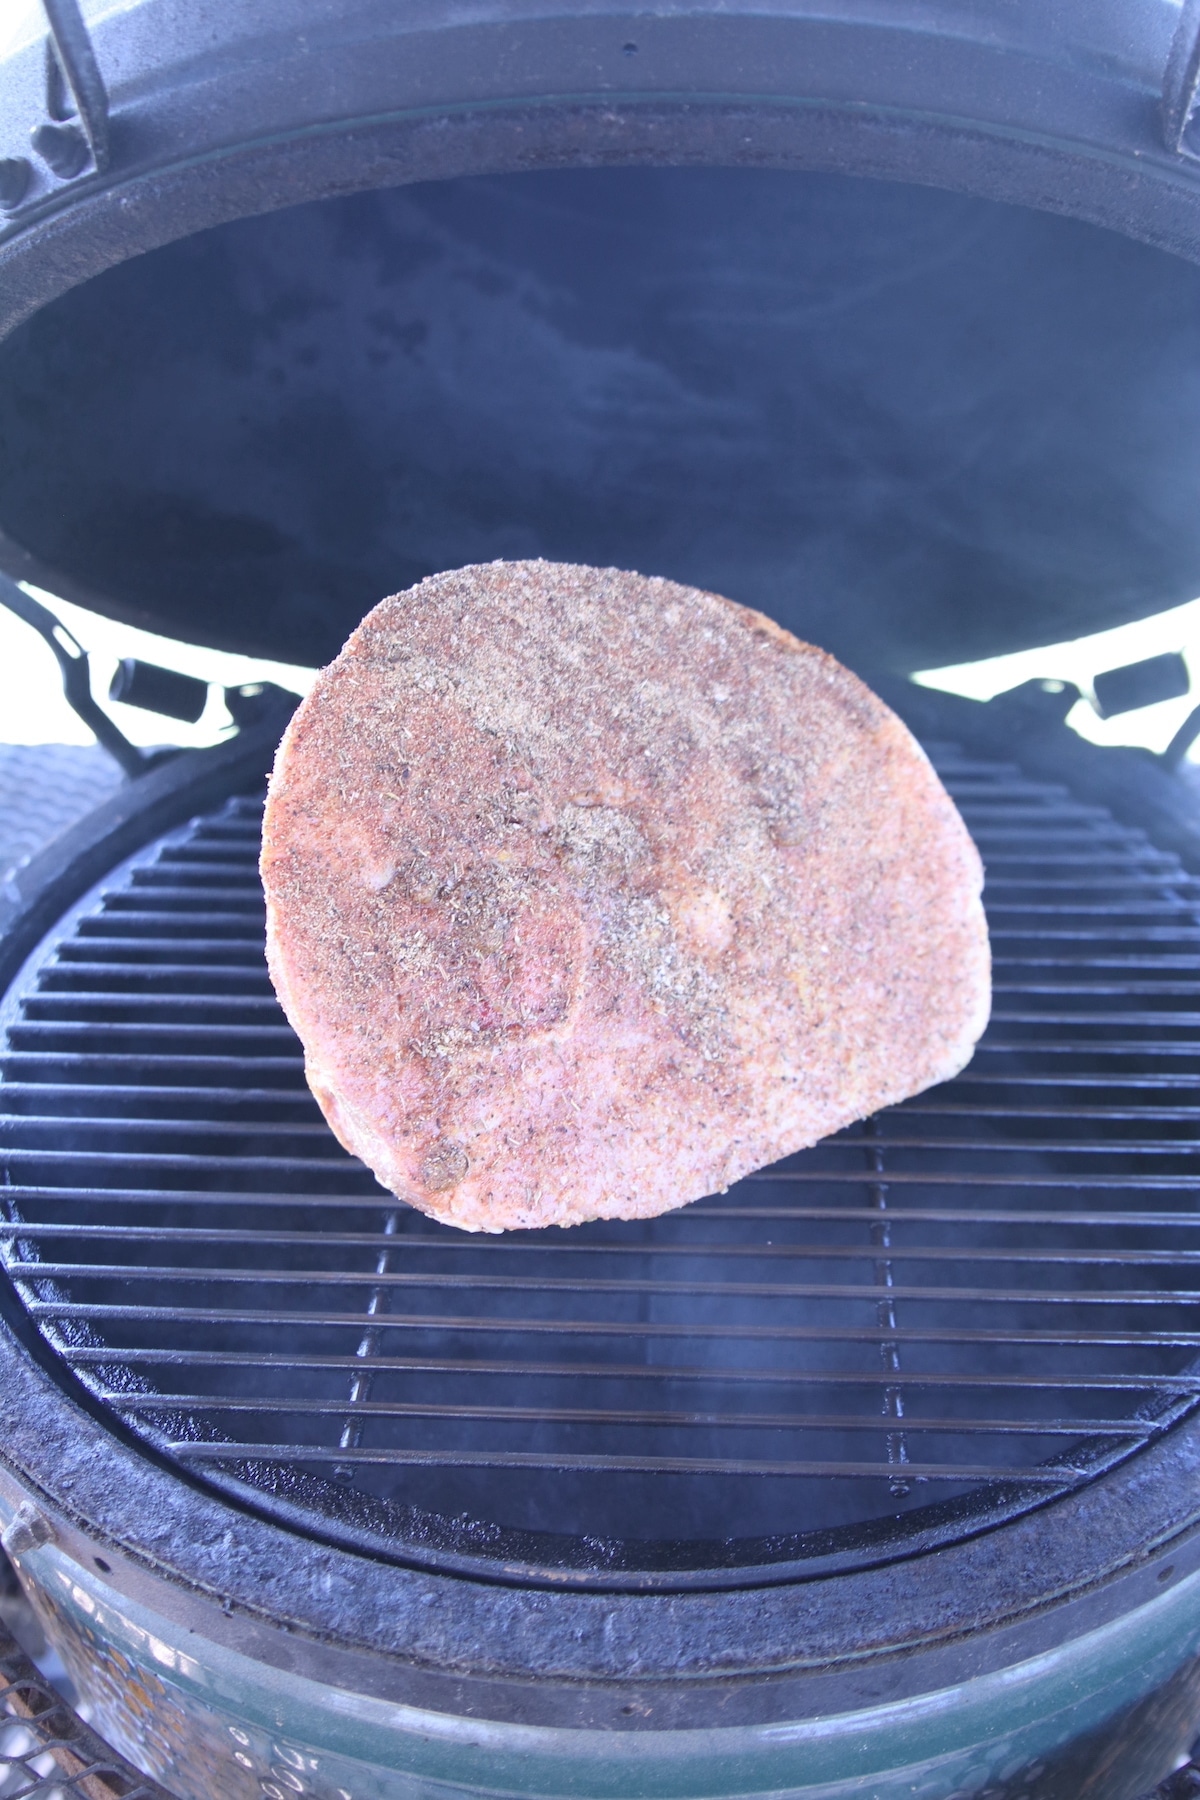 Half ham on a grill.